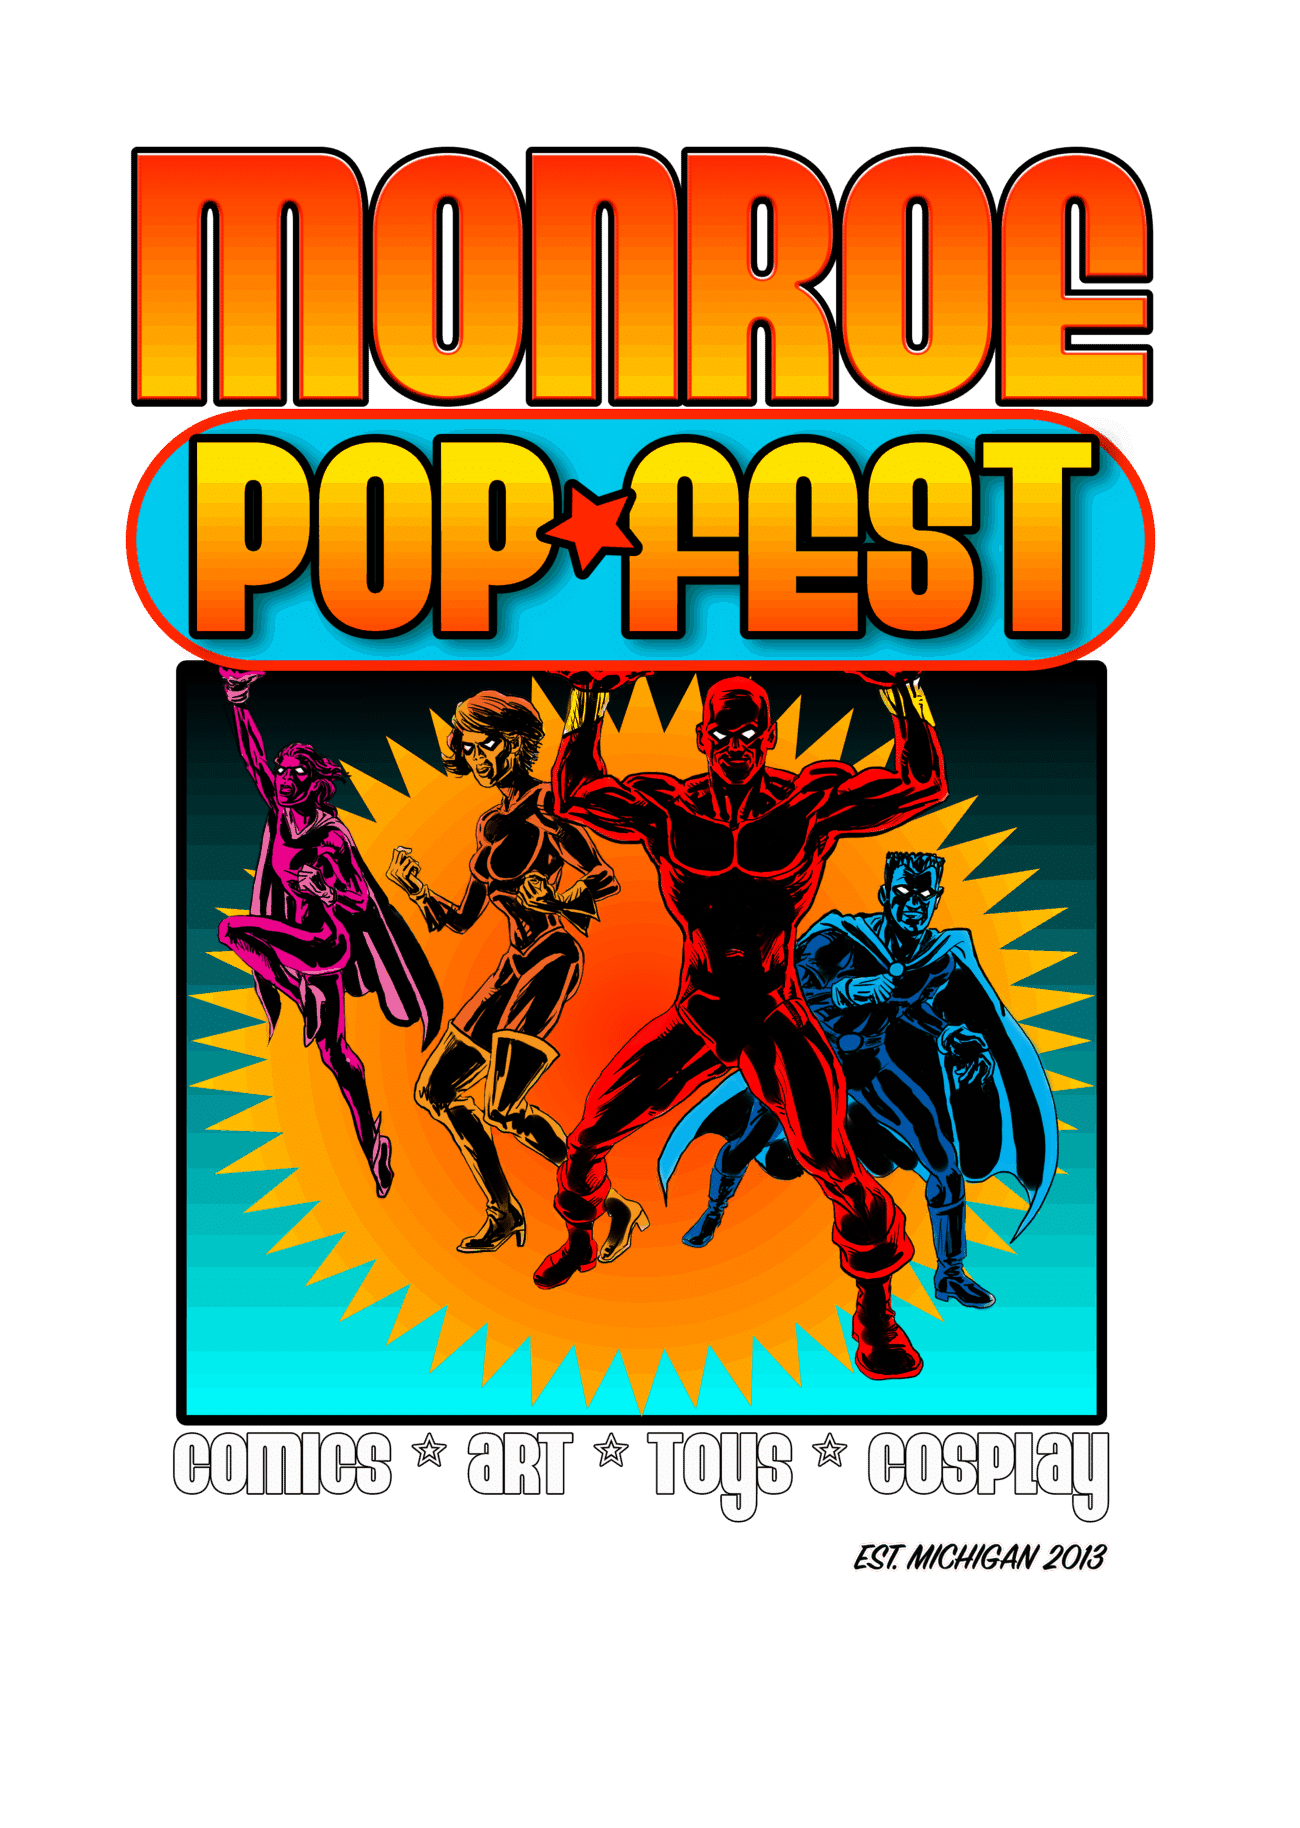 Monroe Pop Fest